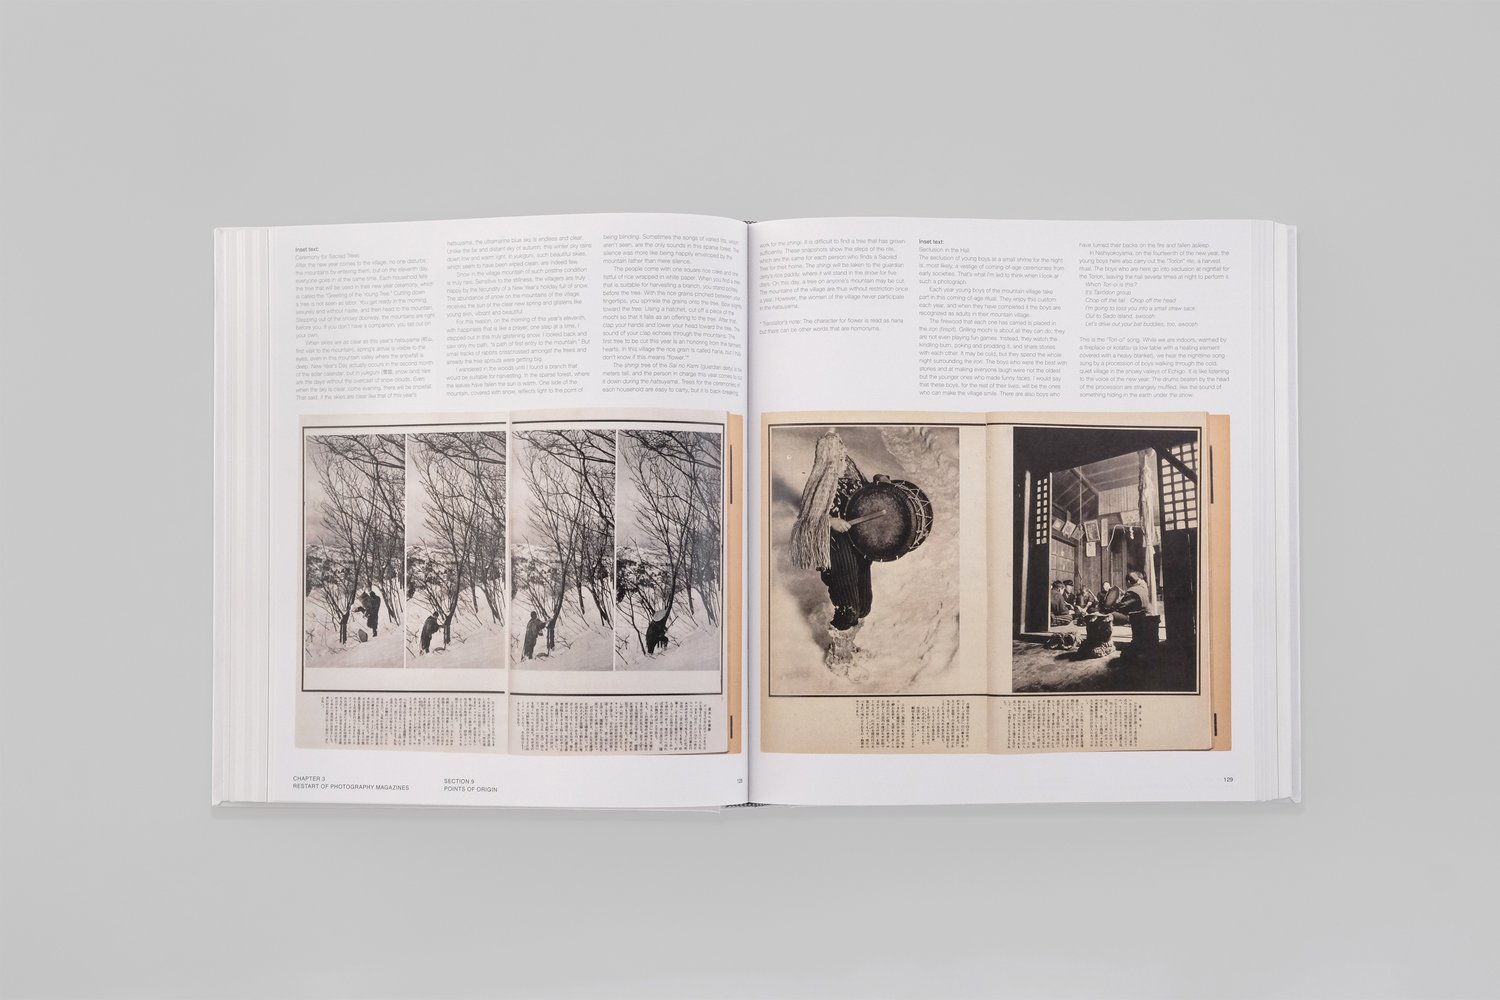 japanese-photography-magazines-1880-1980-vartanian-toda-kaneko-goliga-books-3